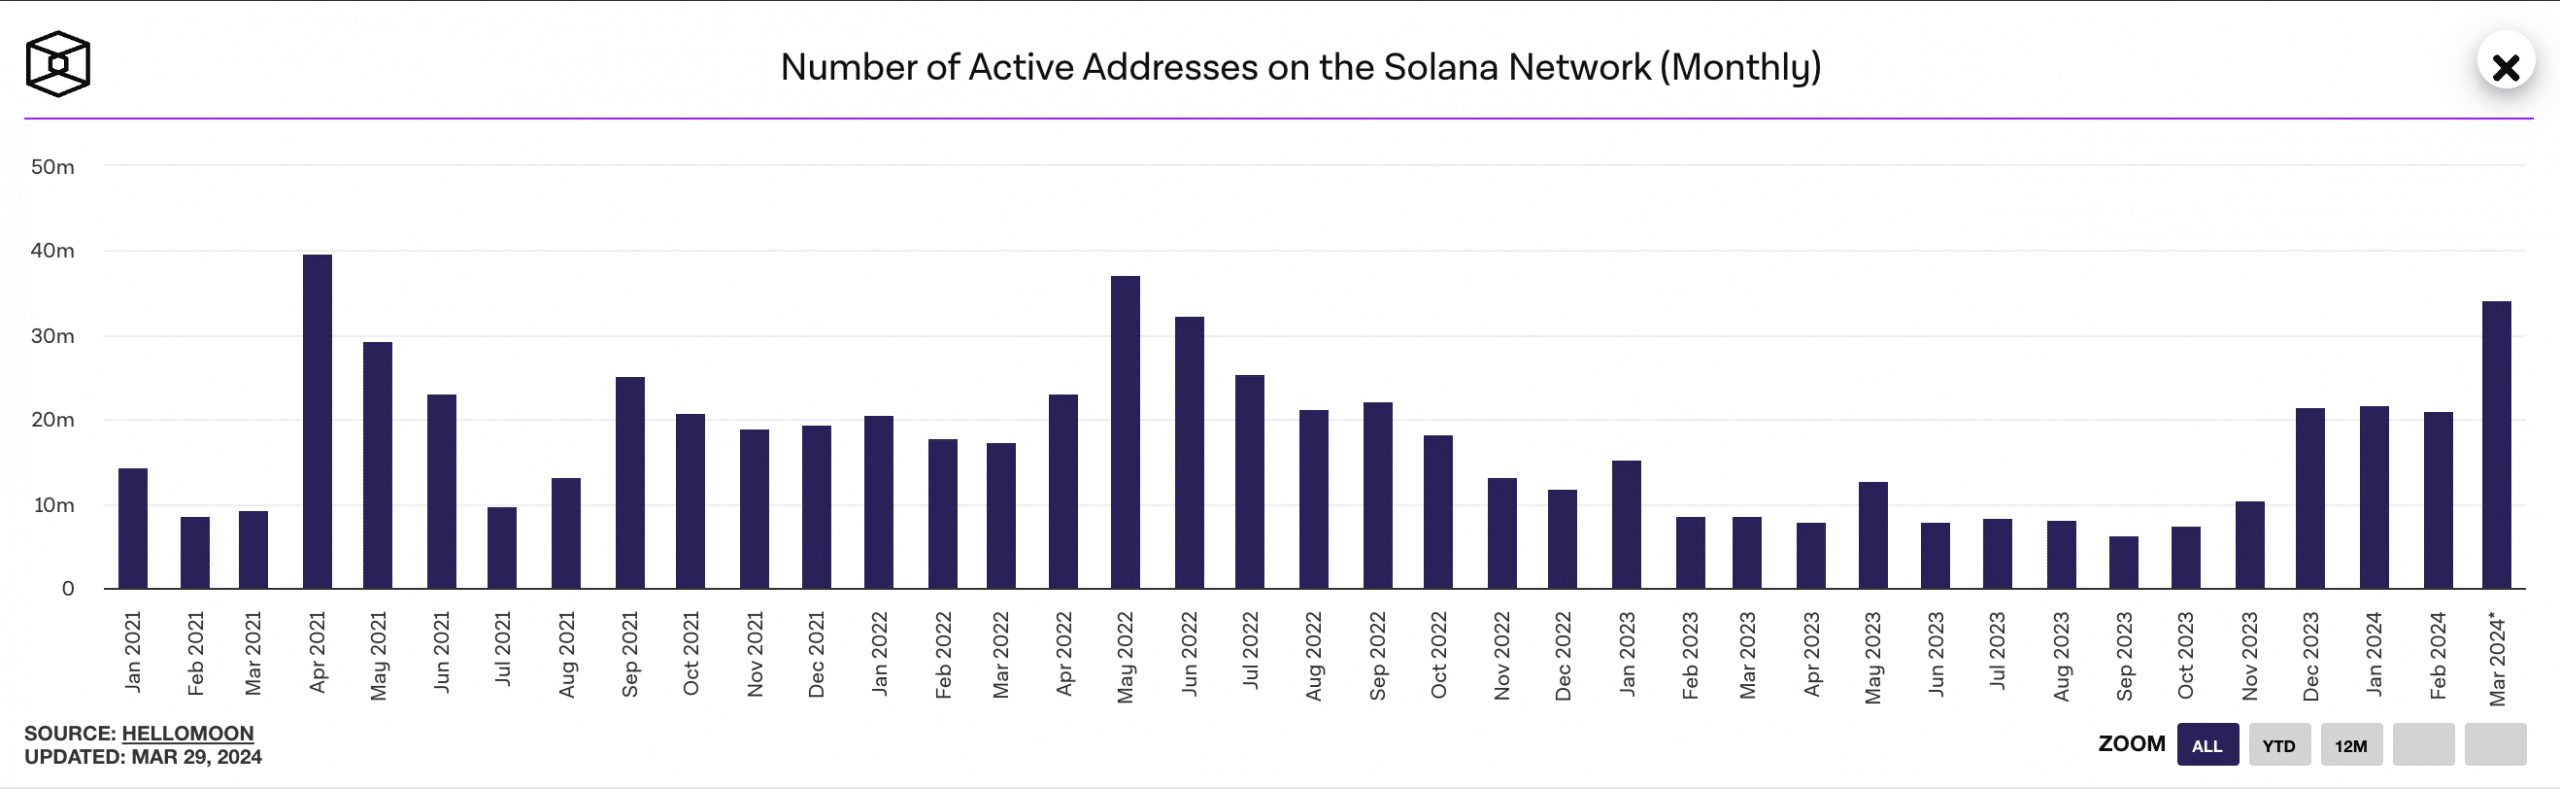 Solana Active Address Count